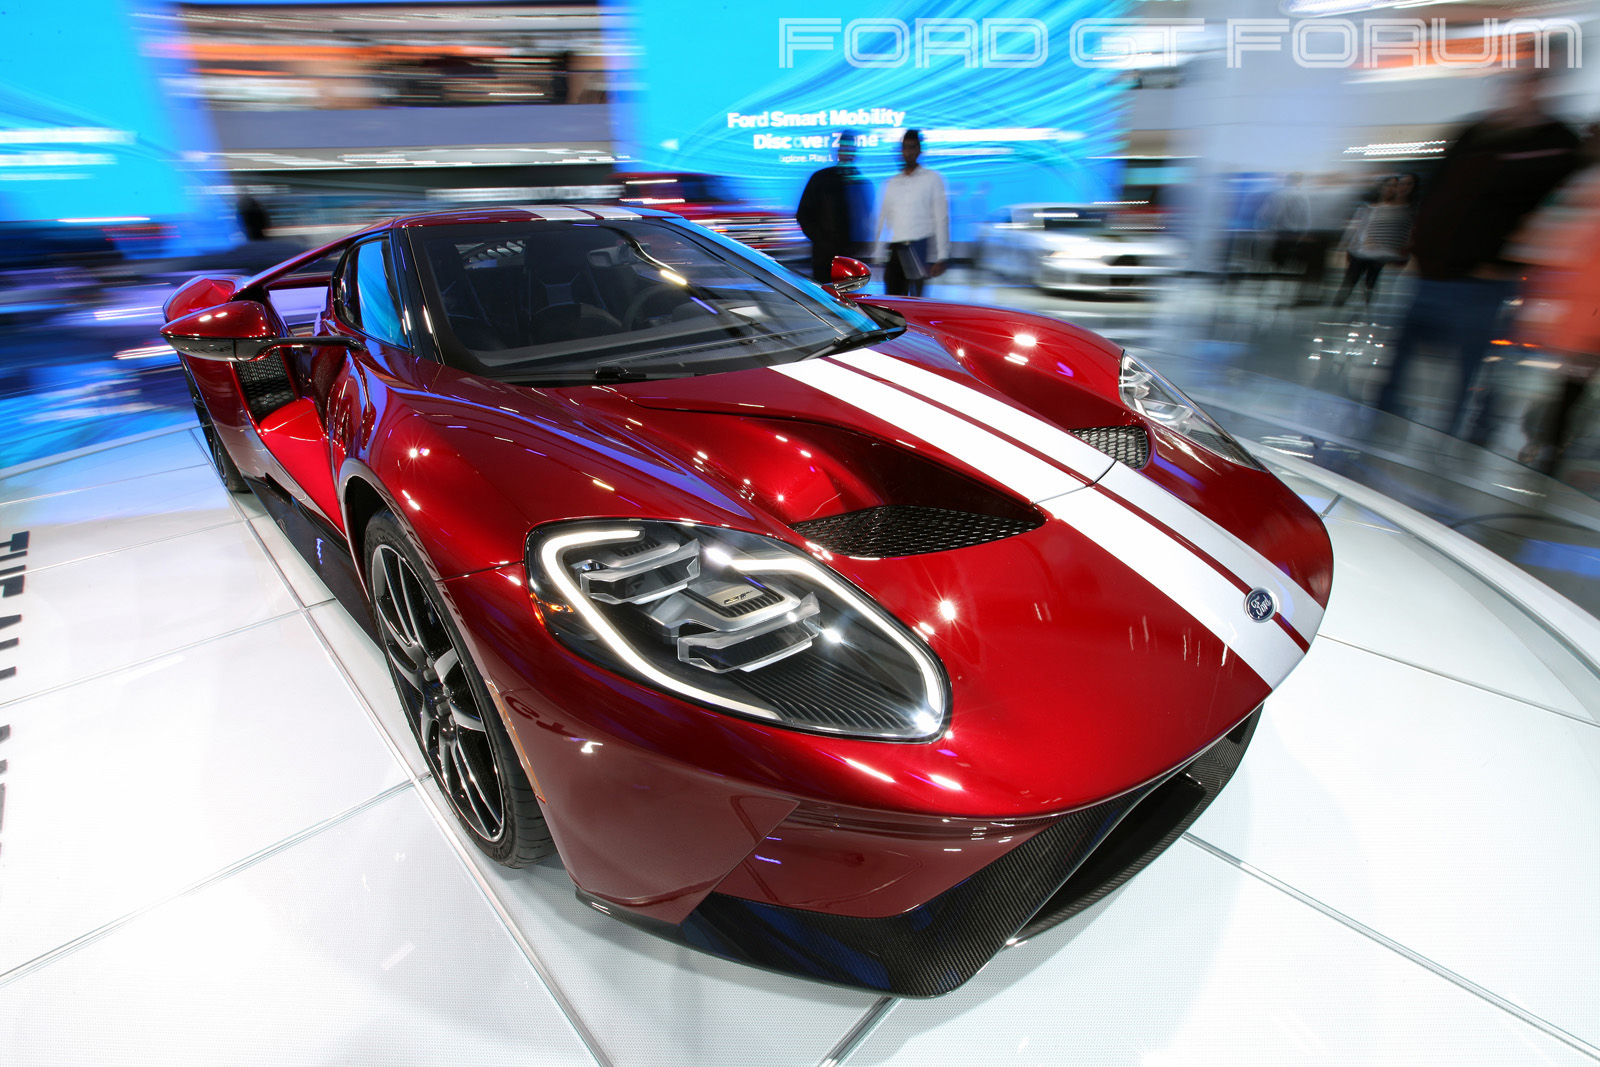 Ford-GT-Autoshow-3000-4.jpg